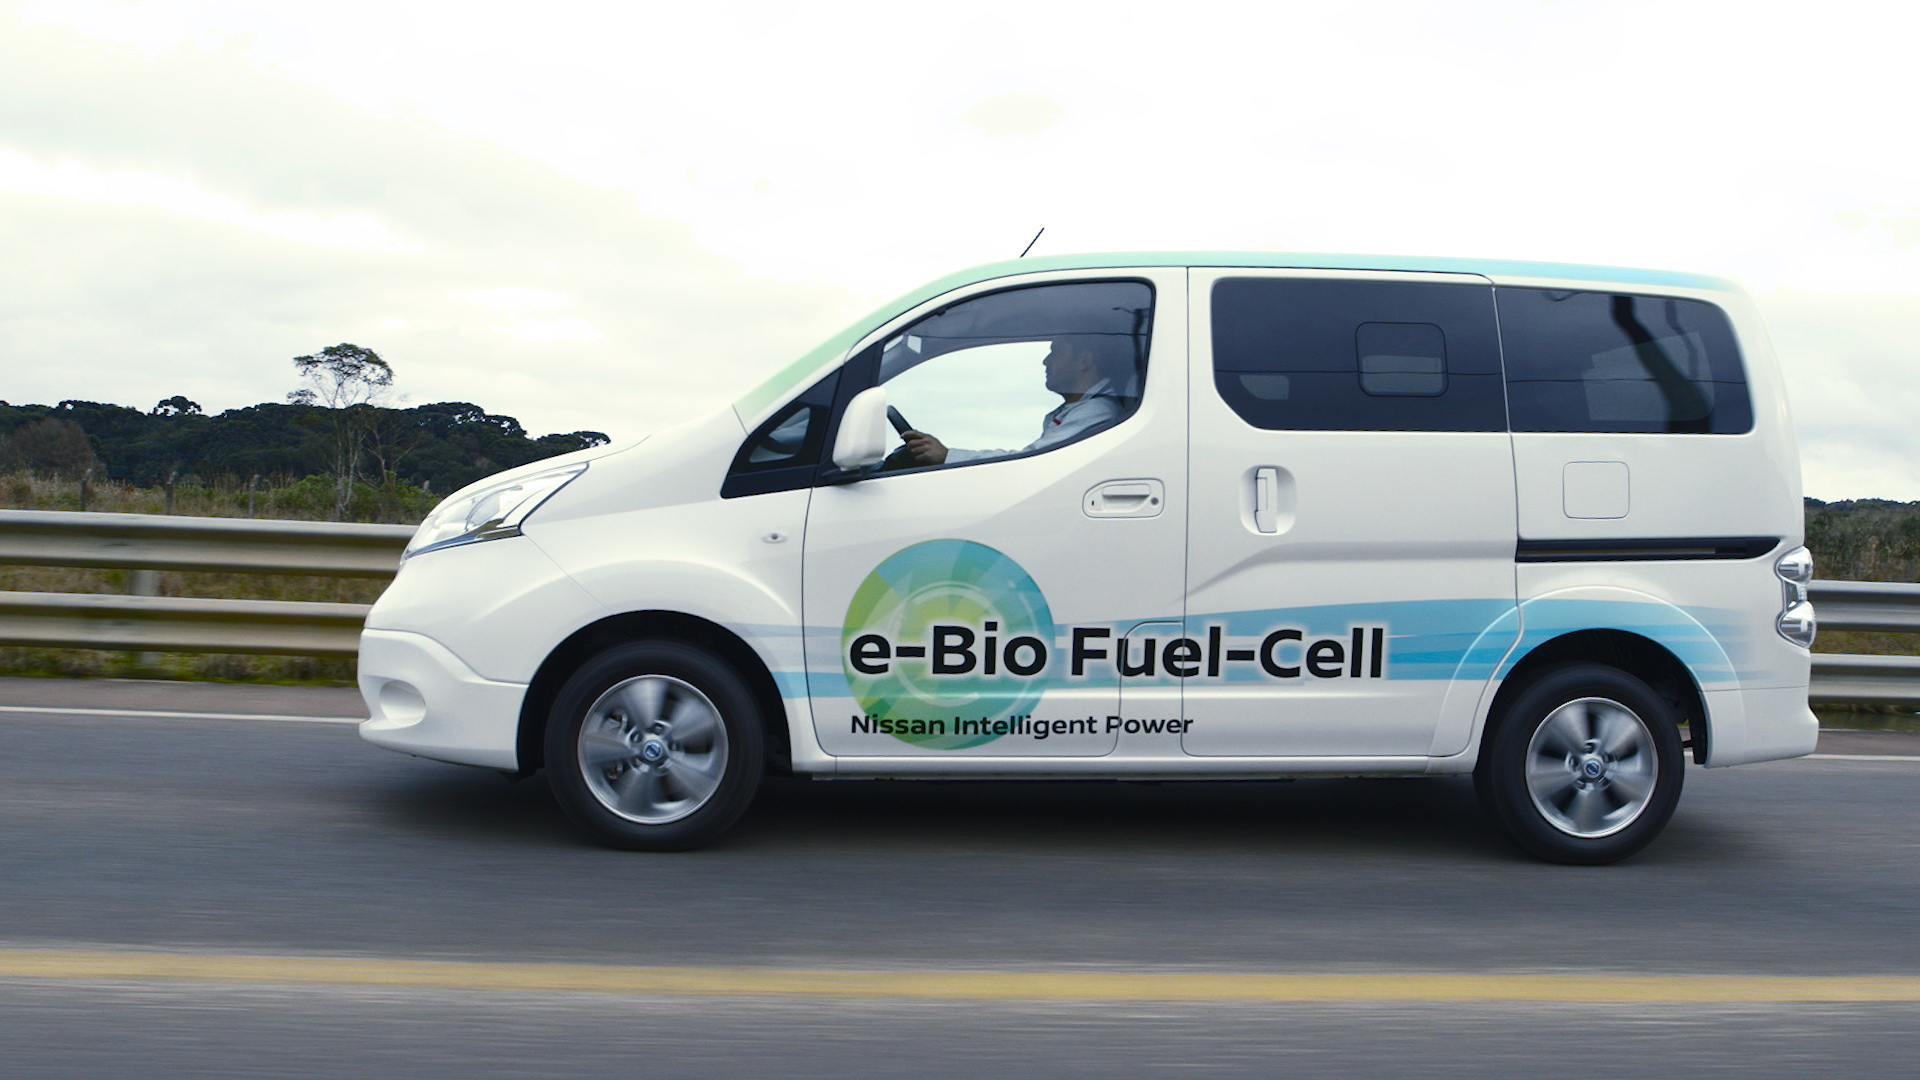 Nissan e-Bio Fuel-Cell Prototype Vehicle © Nissan Motor Co., Ltd.